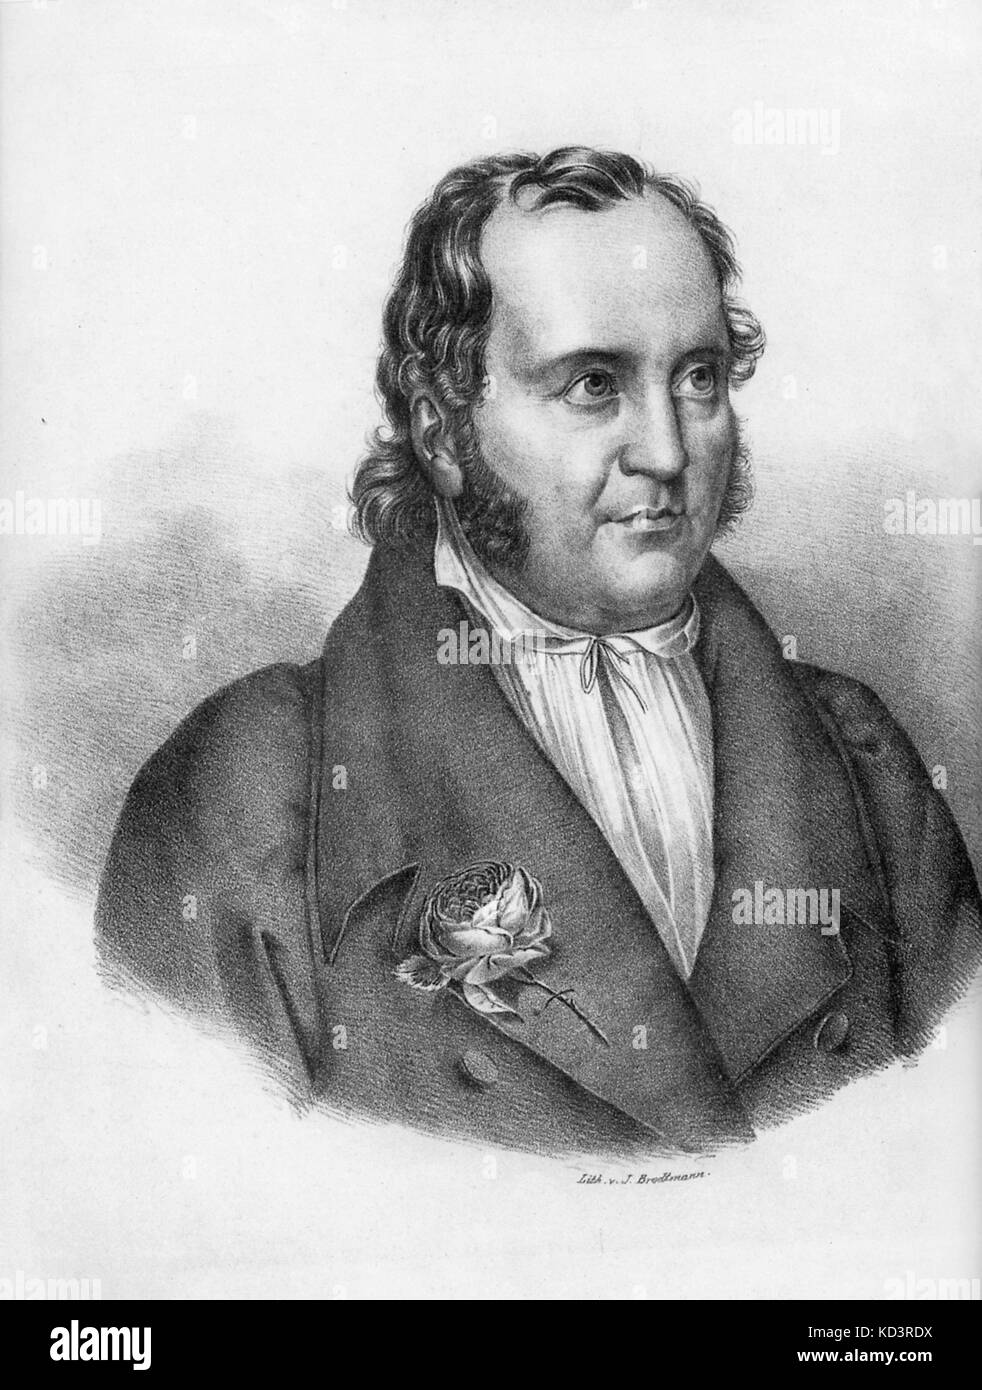 Johann Paul Friedrich Richter o Jean Paul nato Johann Paul Friedrich Richter. Scrittore tedesco. 21 Marzo 1763 - 14 novembre 1825 Foto Stock